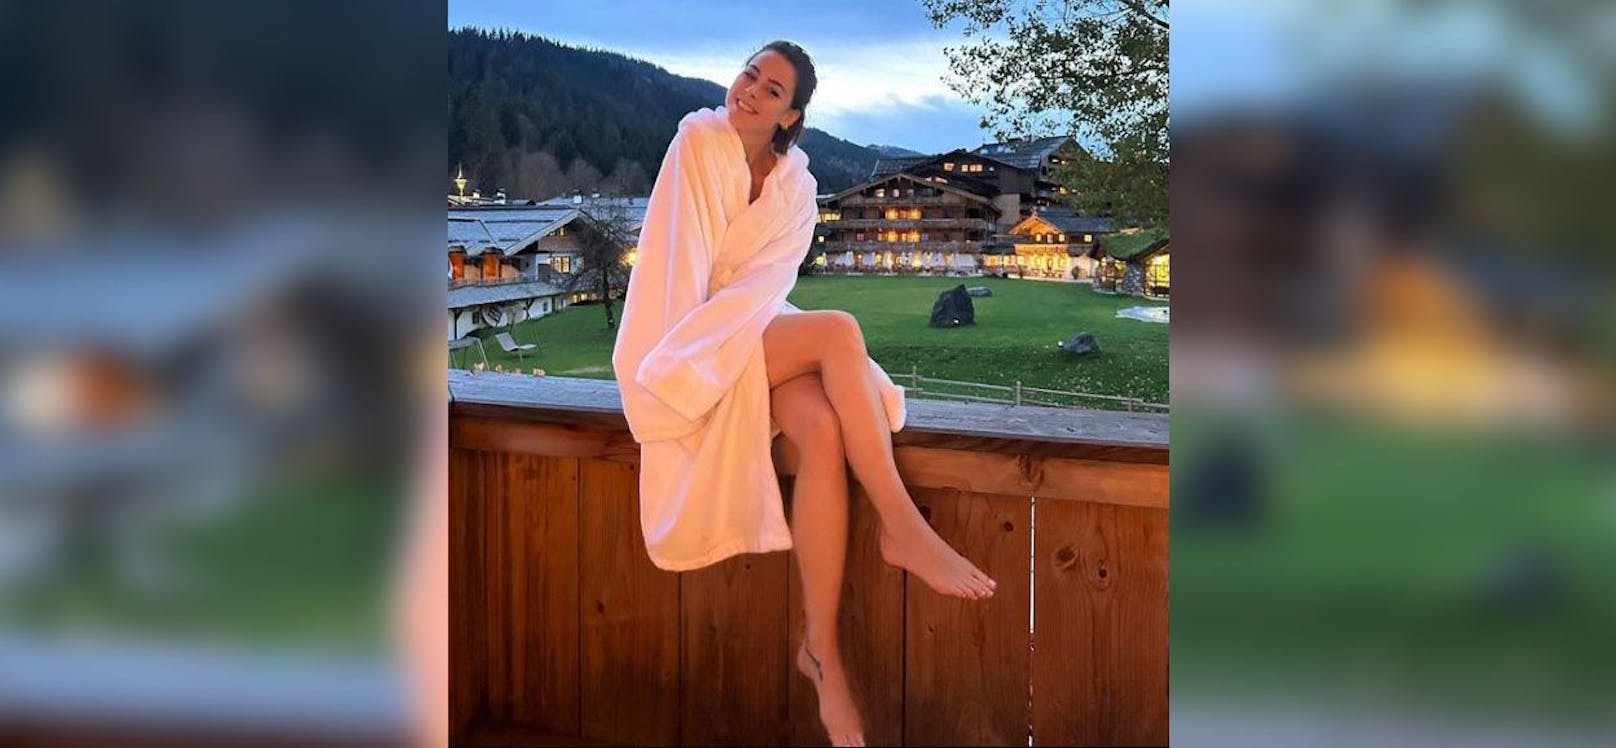 Lena im Bademantel – intime Urlaubsfotos aus Tirol